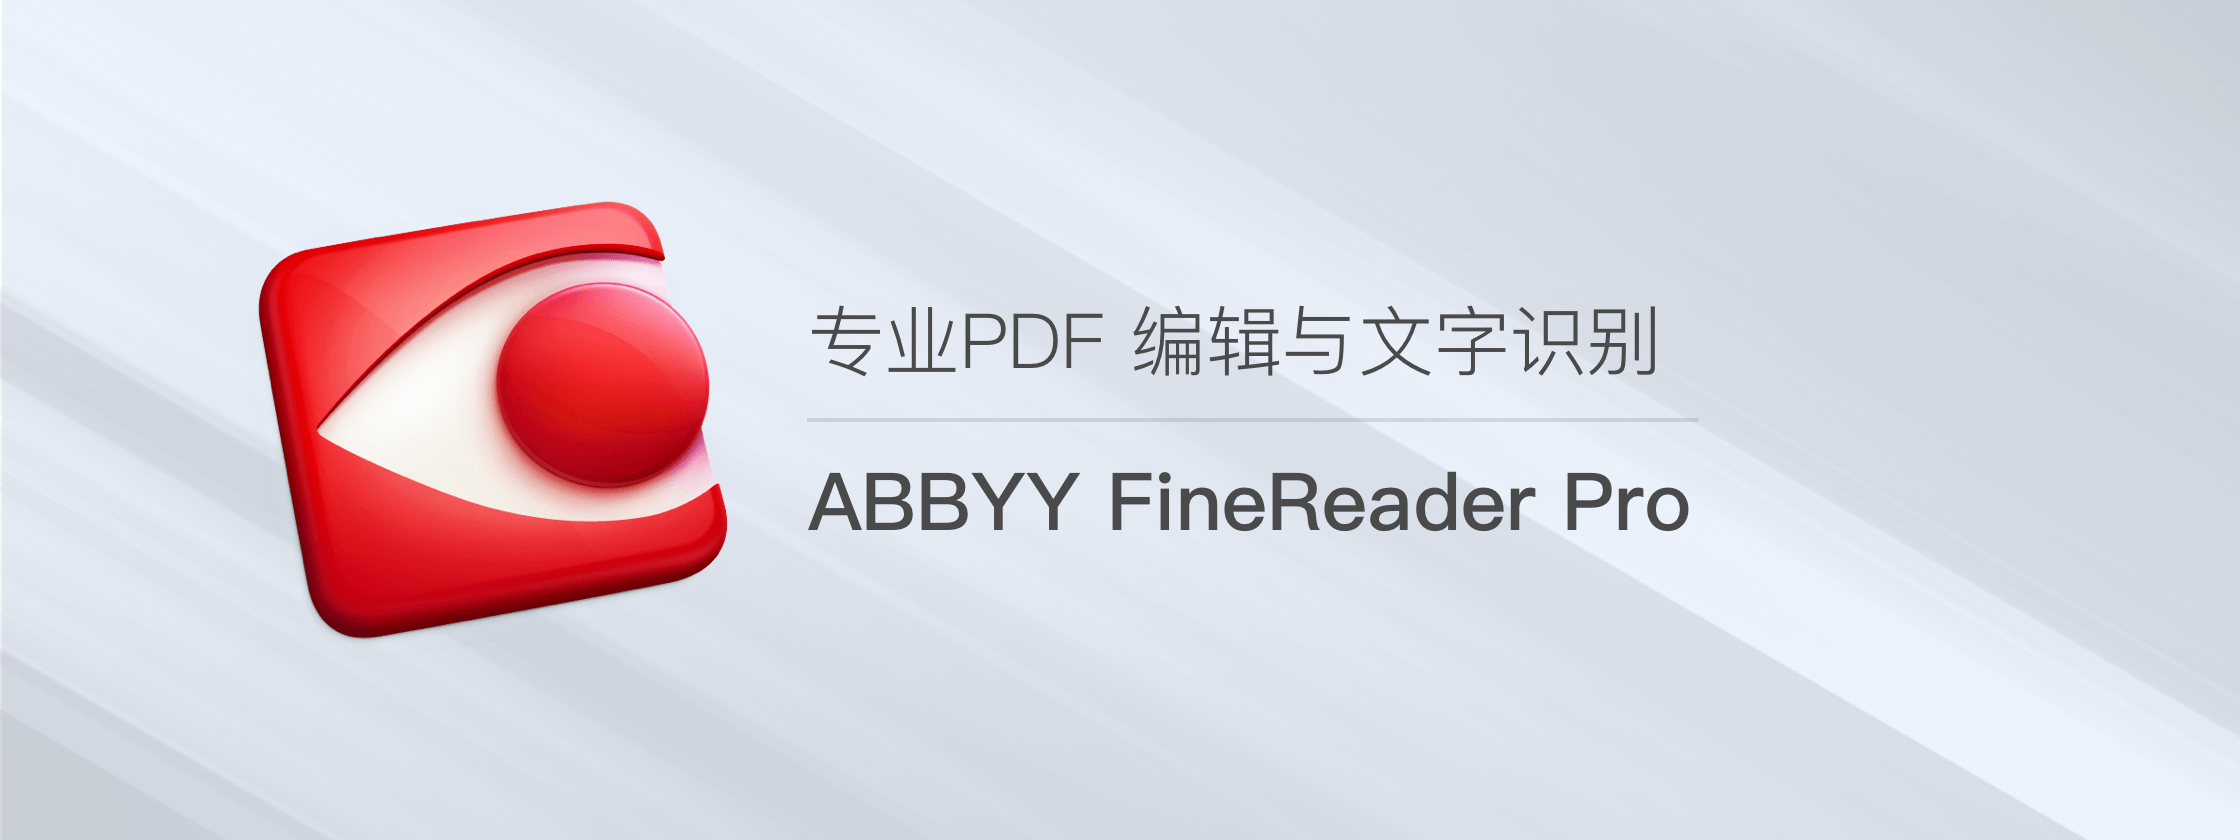 ABBYY FineReader Pro for Mac – 专业PDF 编辑与文字识别